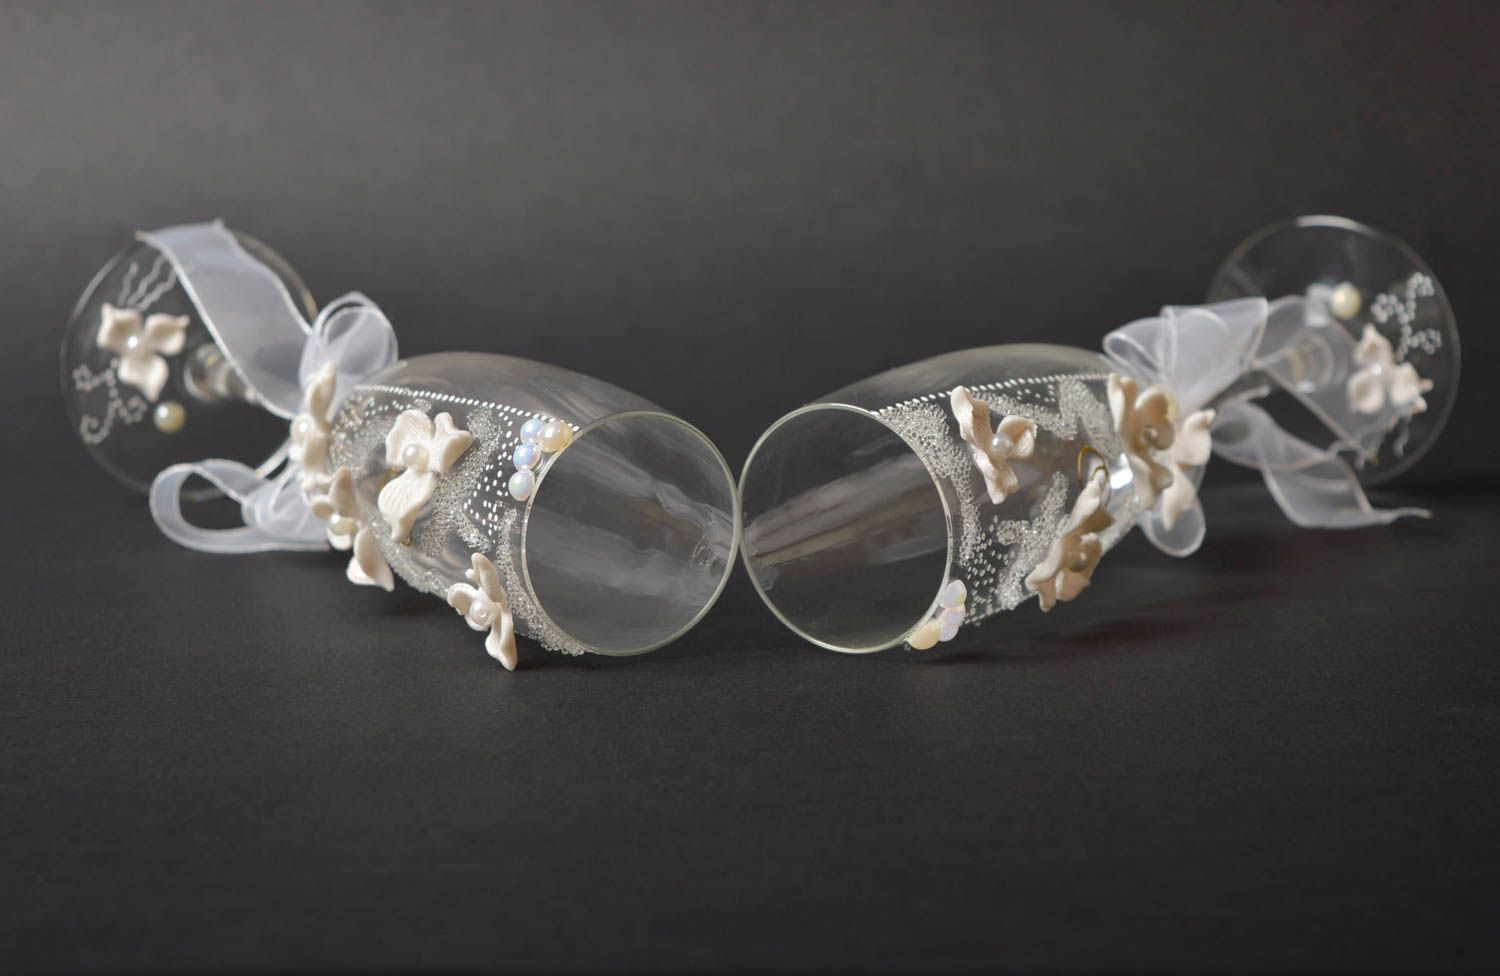 Handmade glasses unusual glasses wedding accessory gift ideas beautiful glasses photo 5